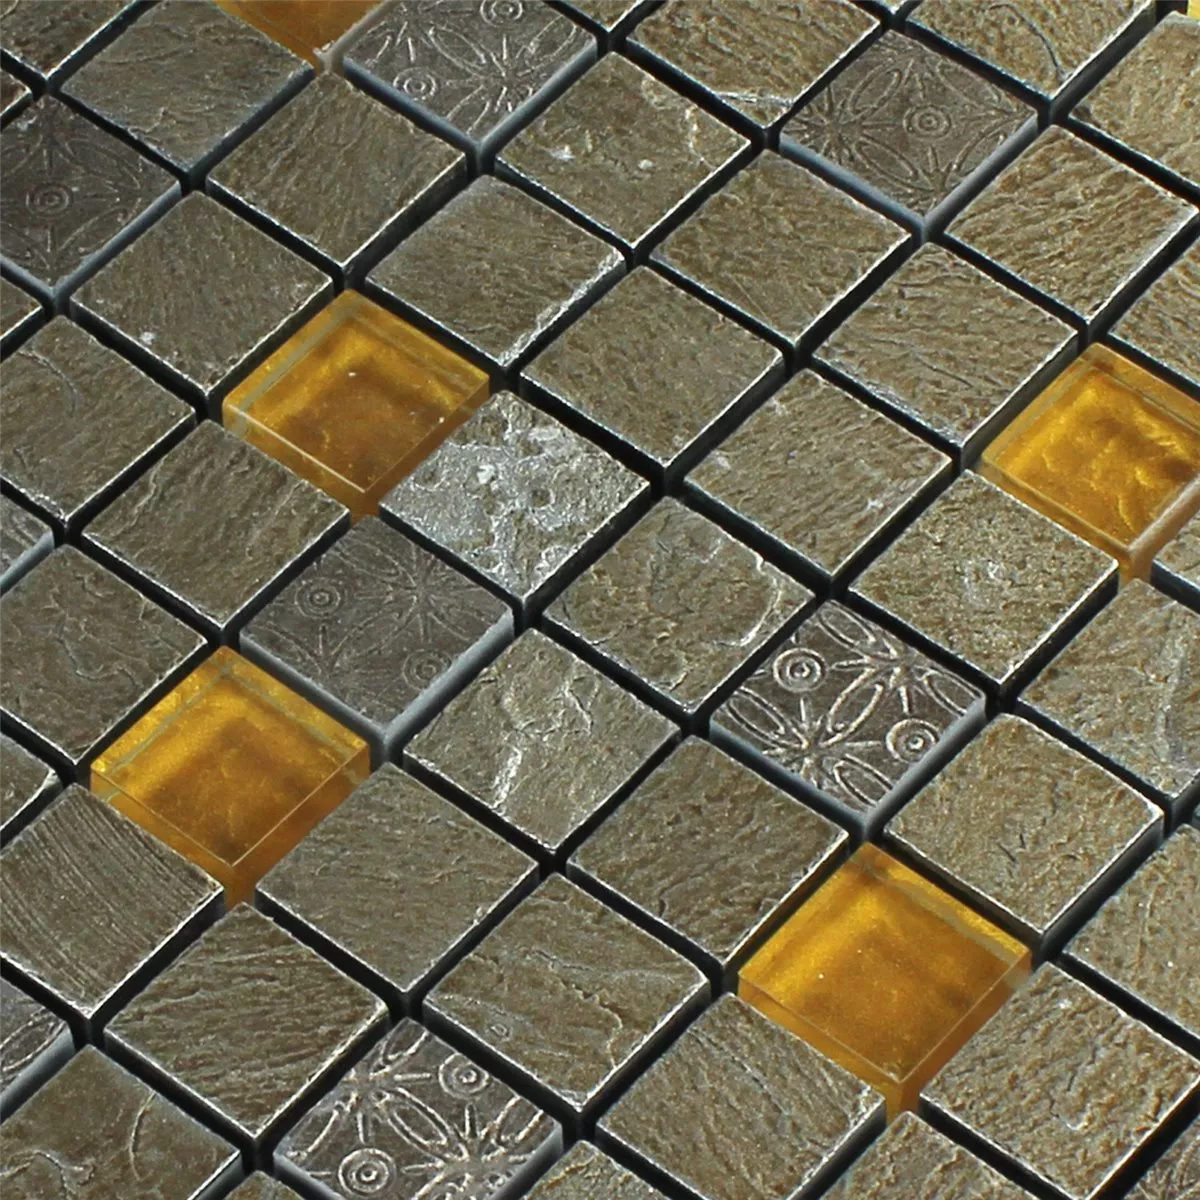 Sample Mosaic Tiles Glass Natural Stone Grey Orange